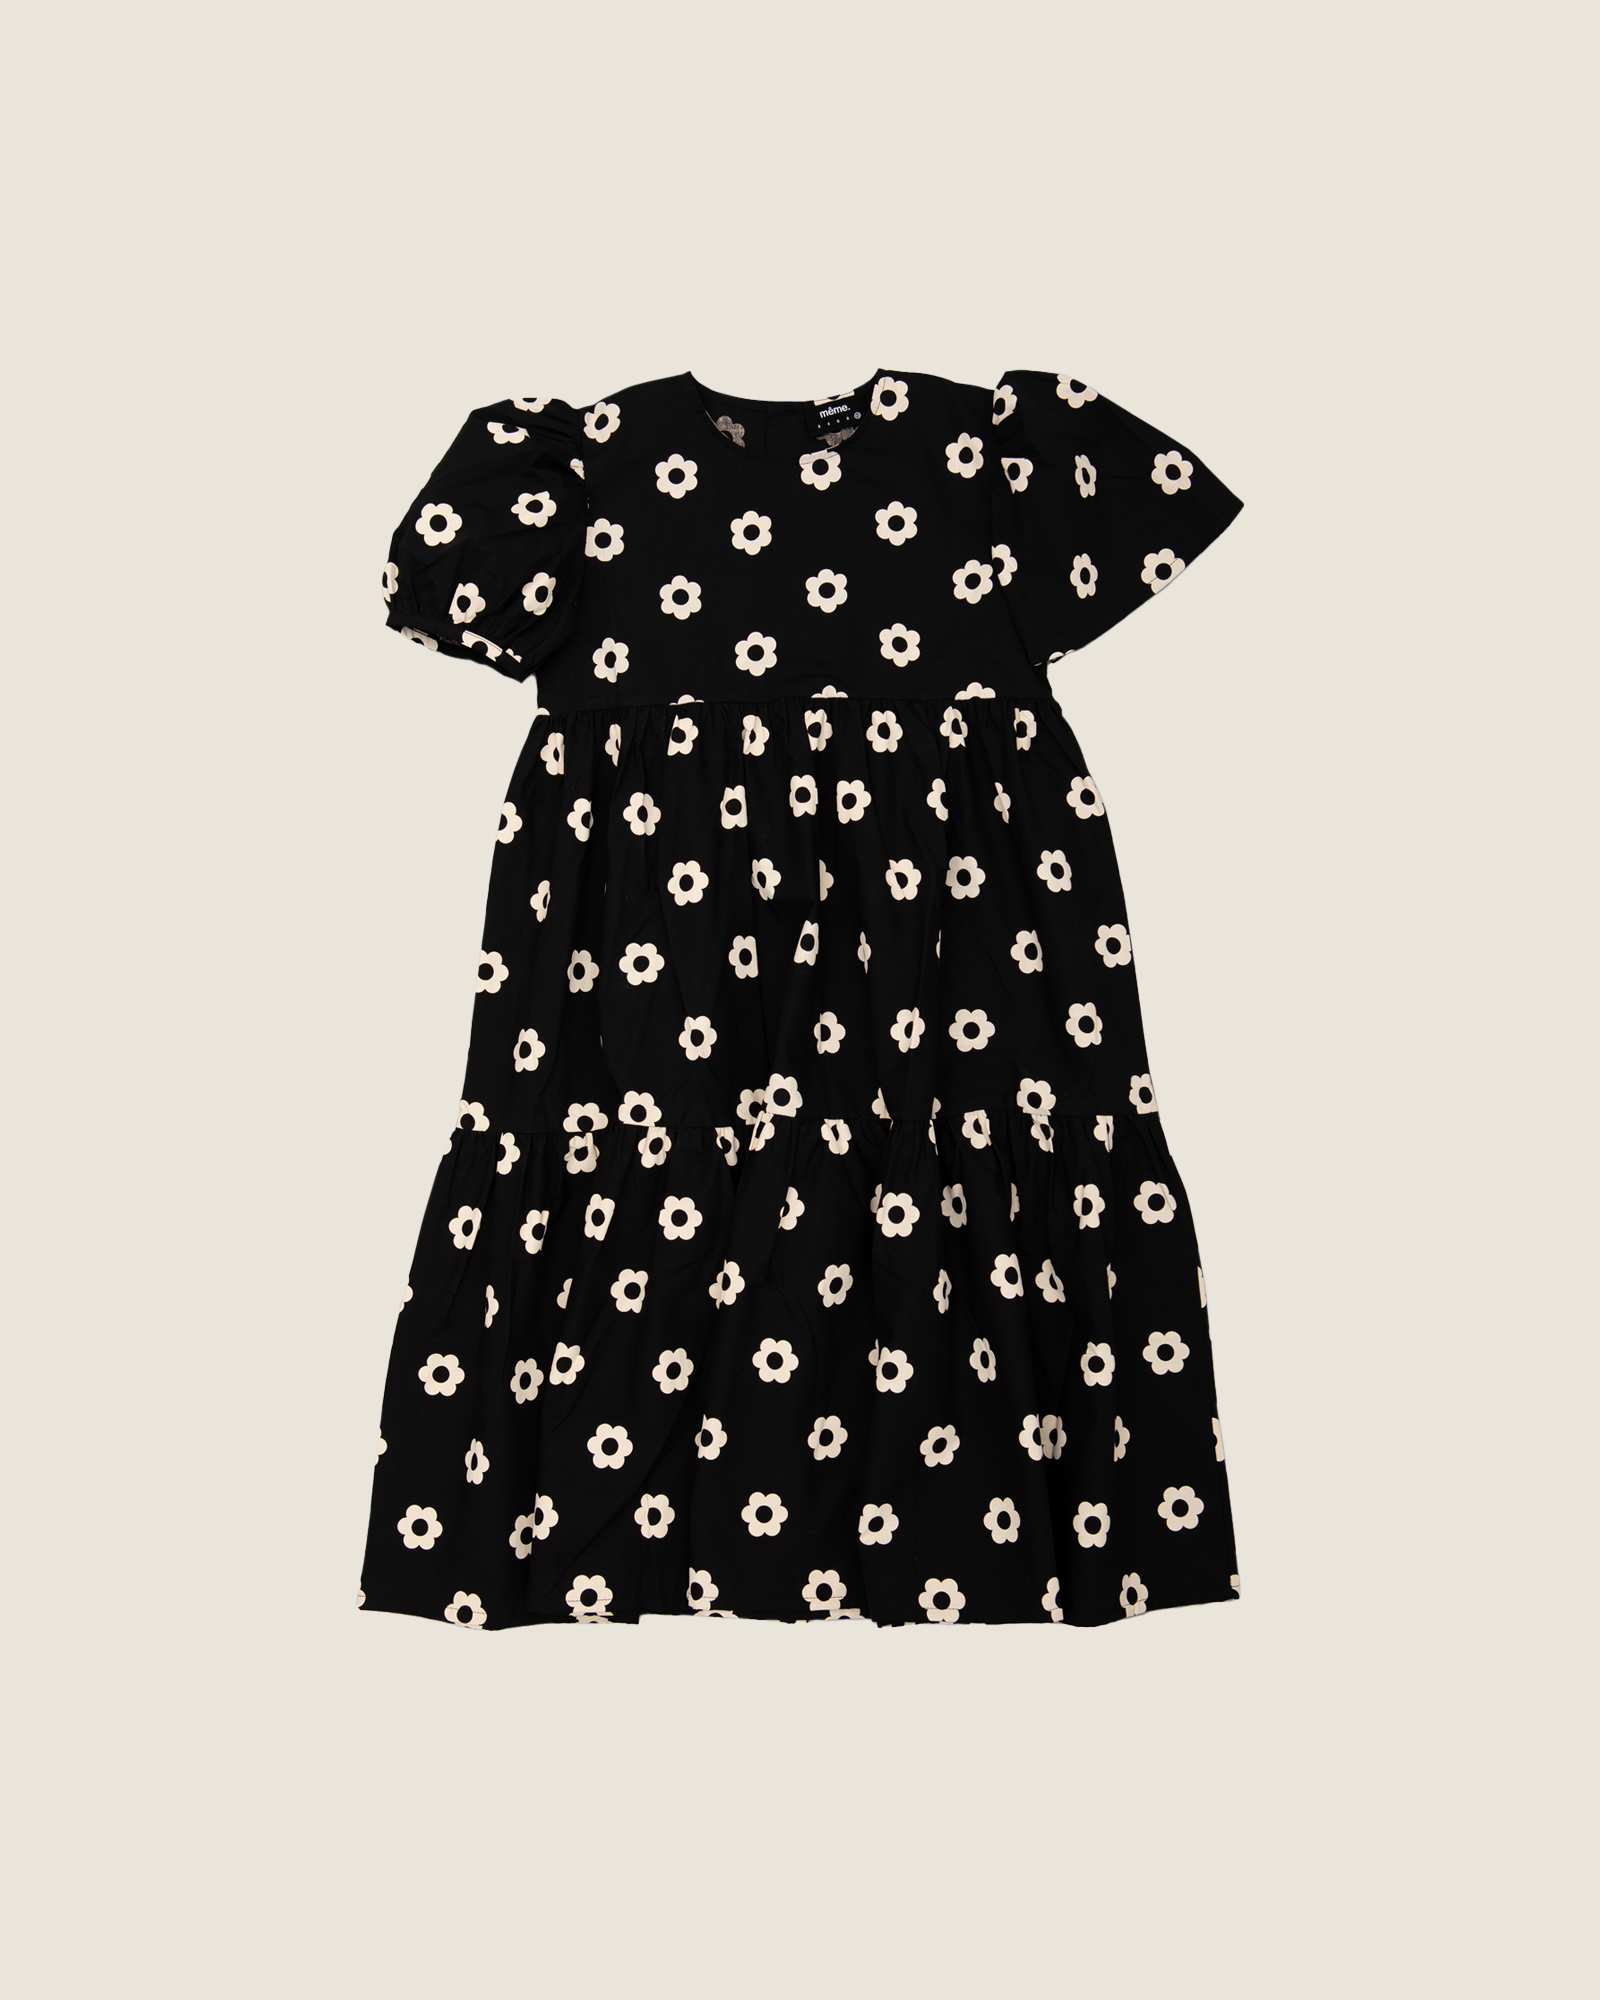 max asymmetrical dress - daisy dots